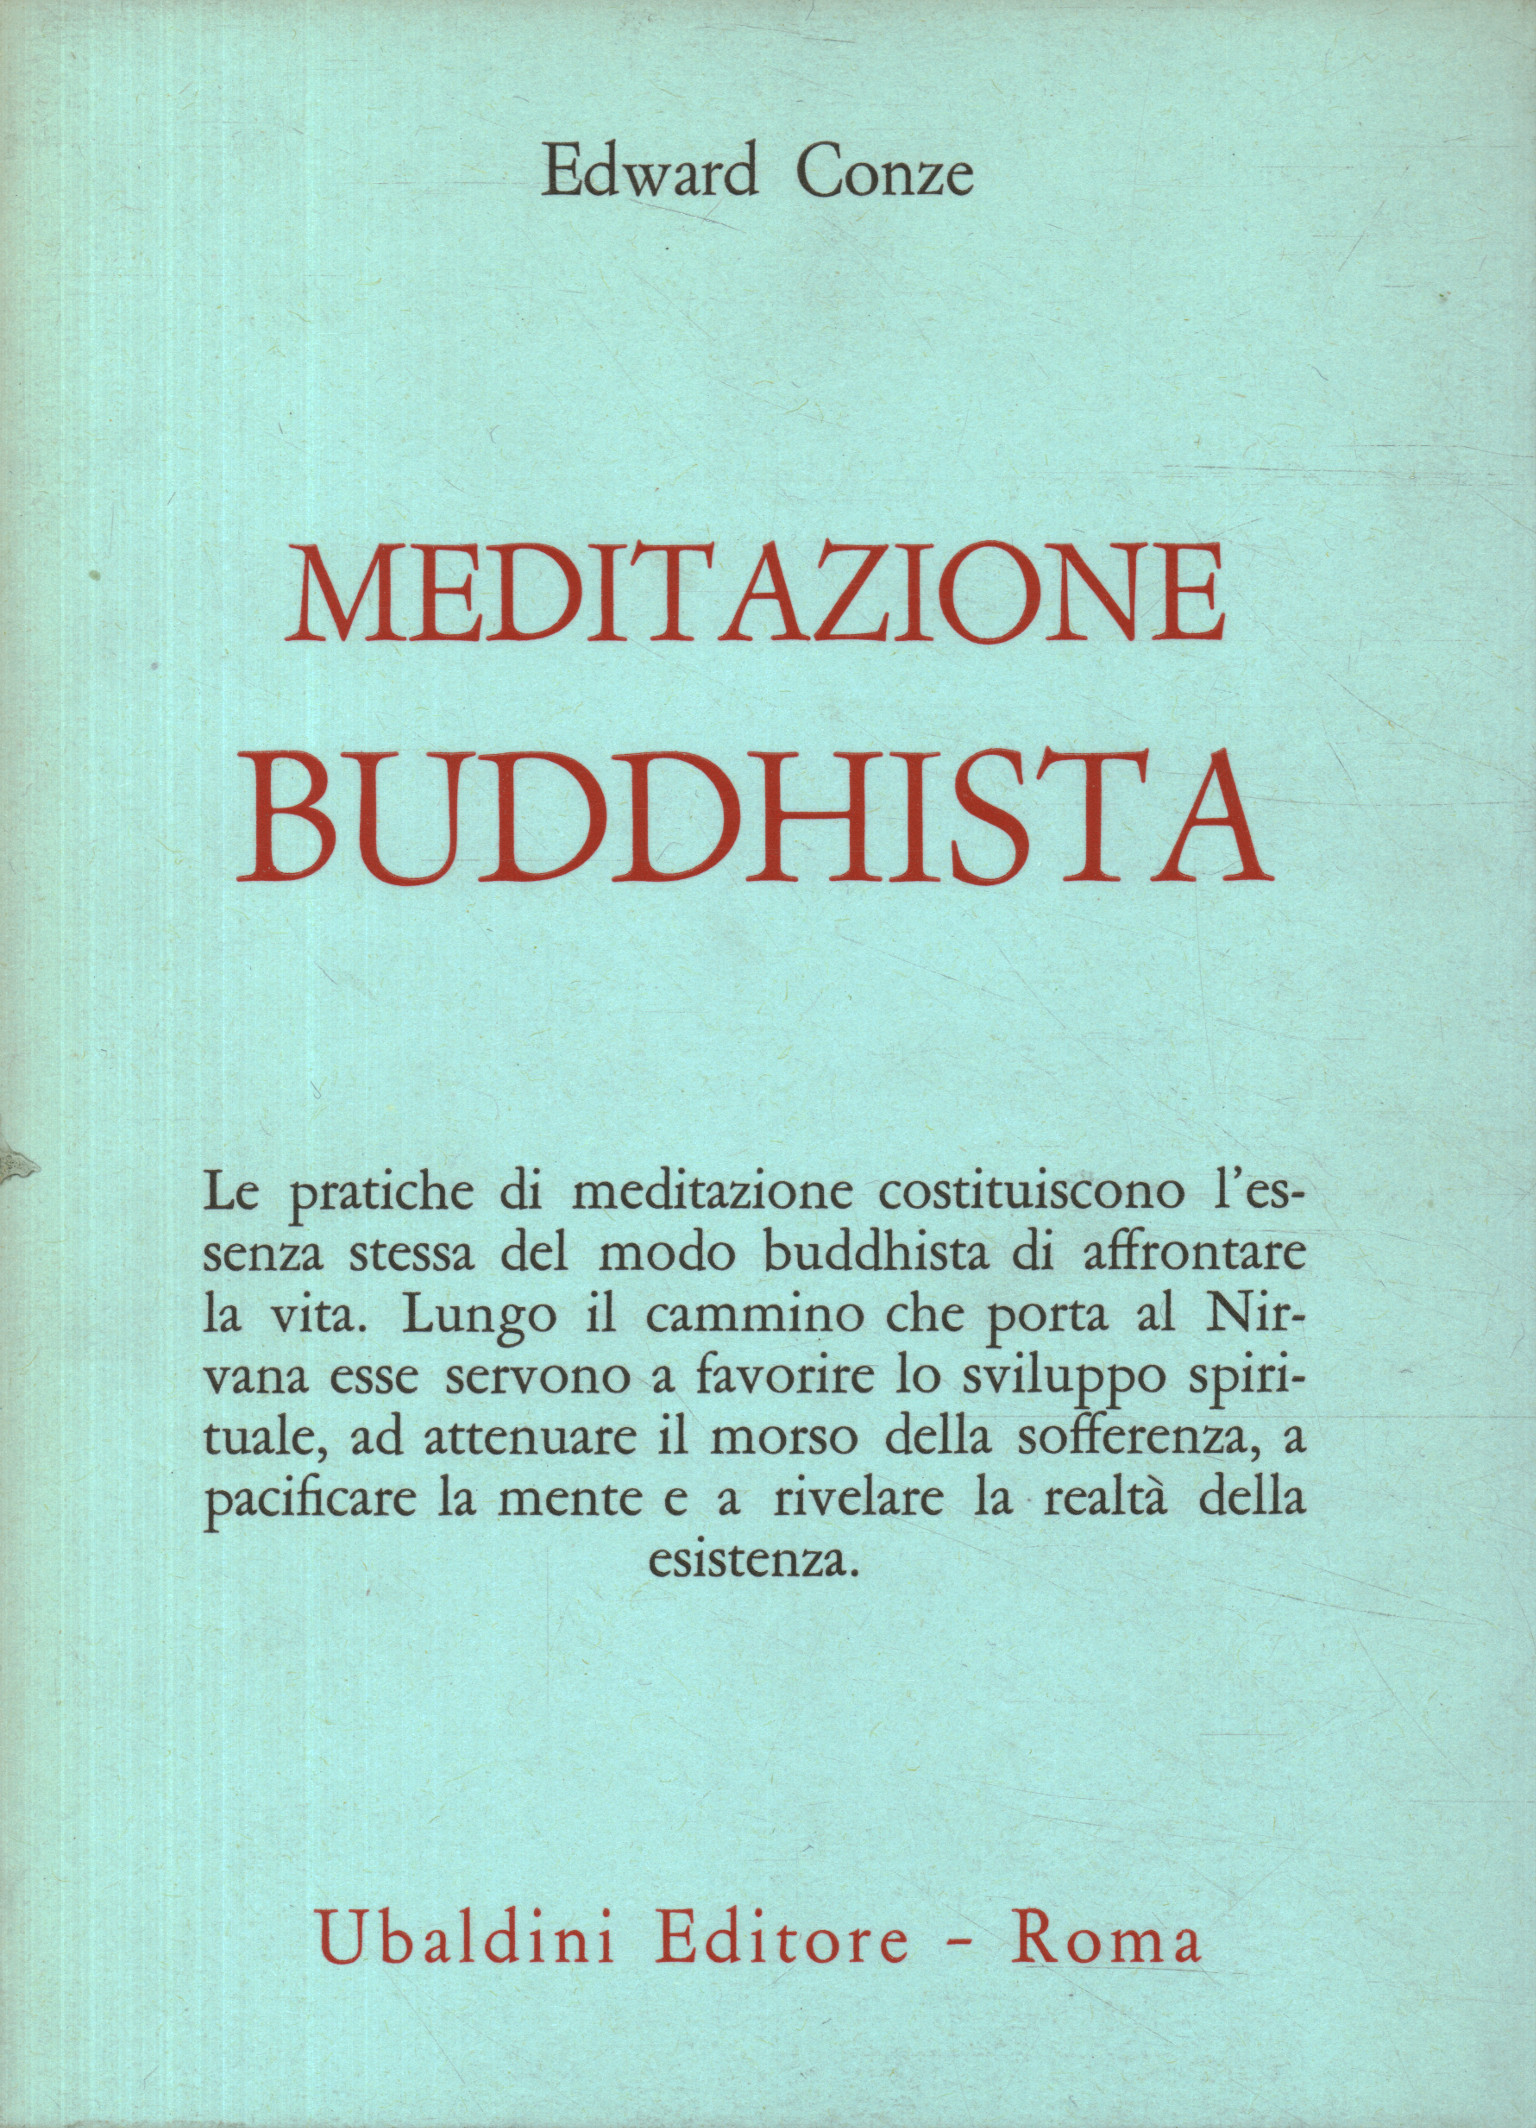 Buddhist meditation